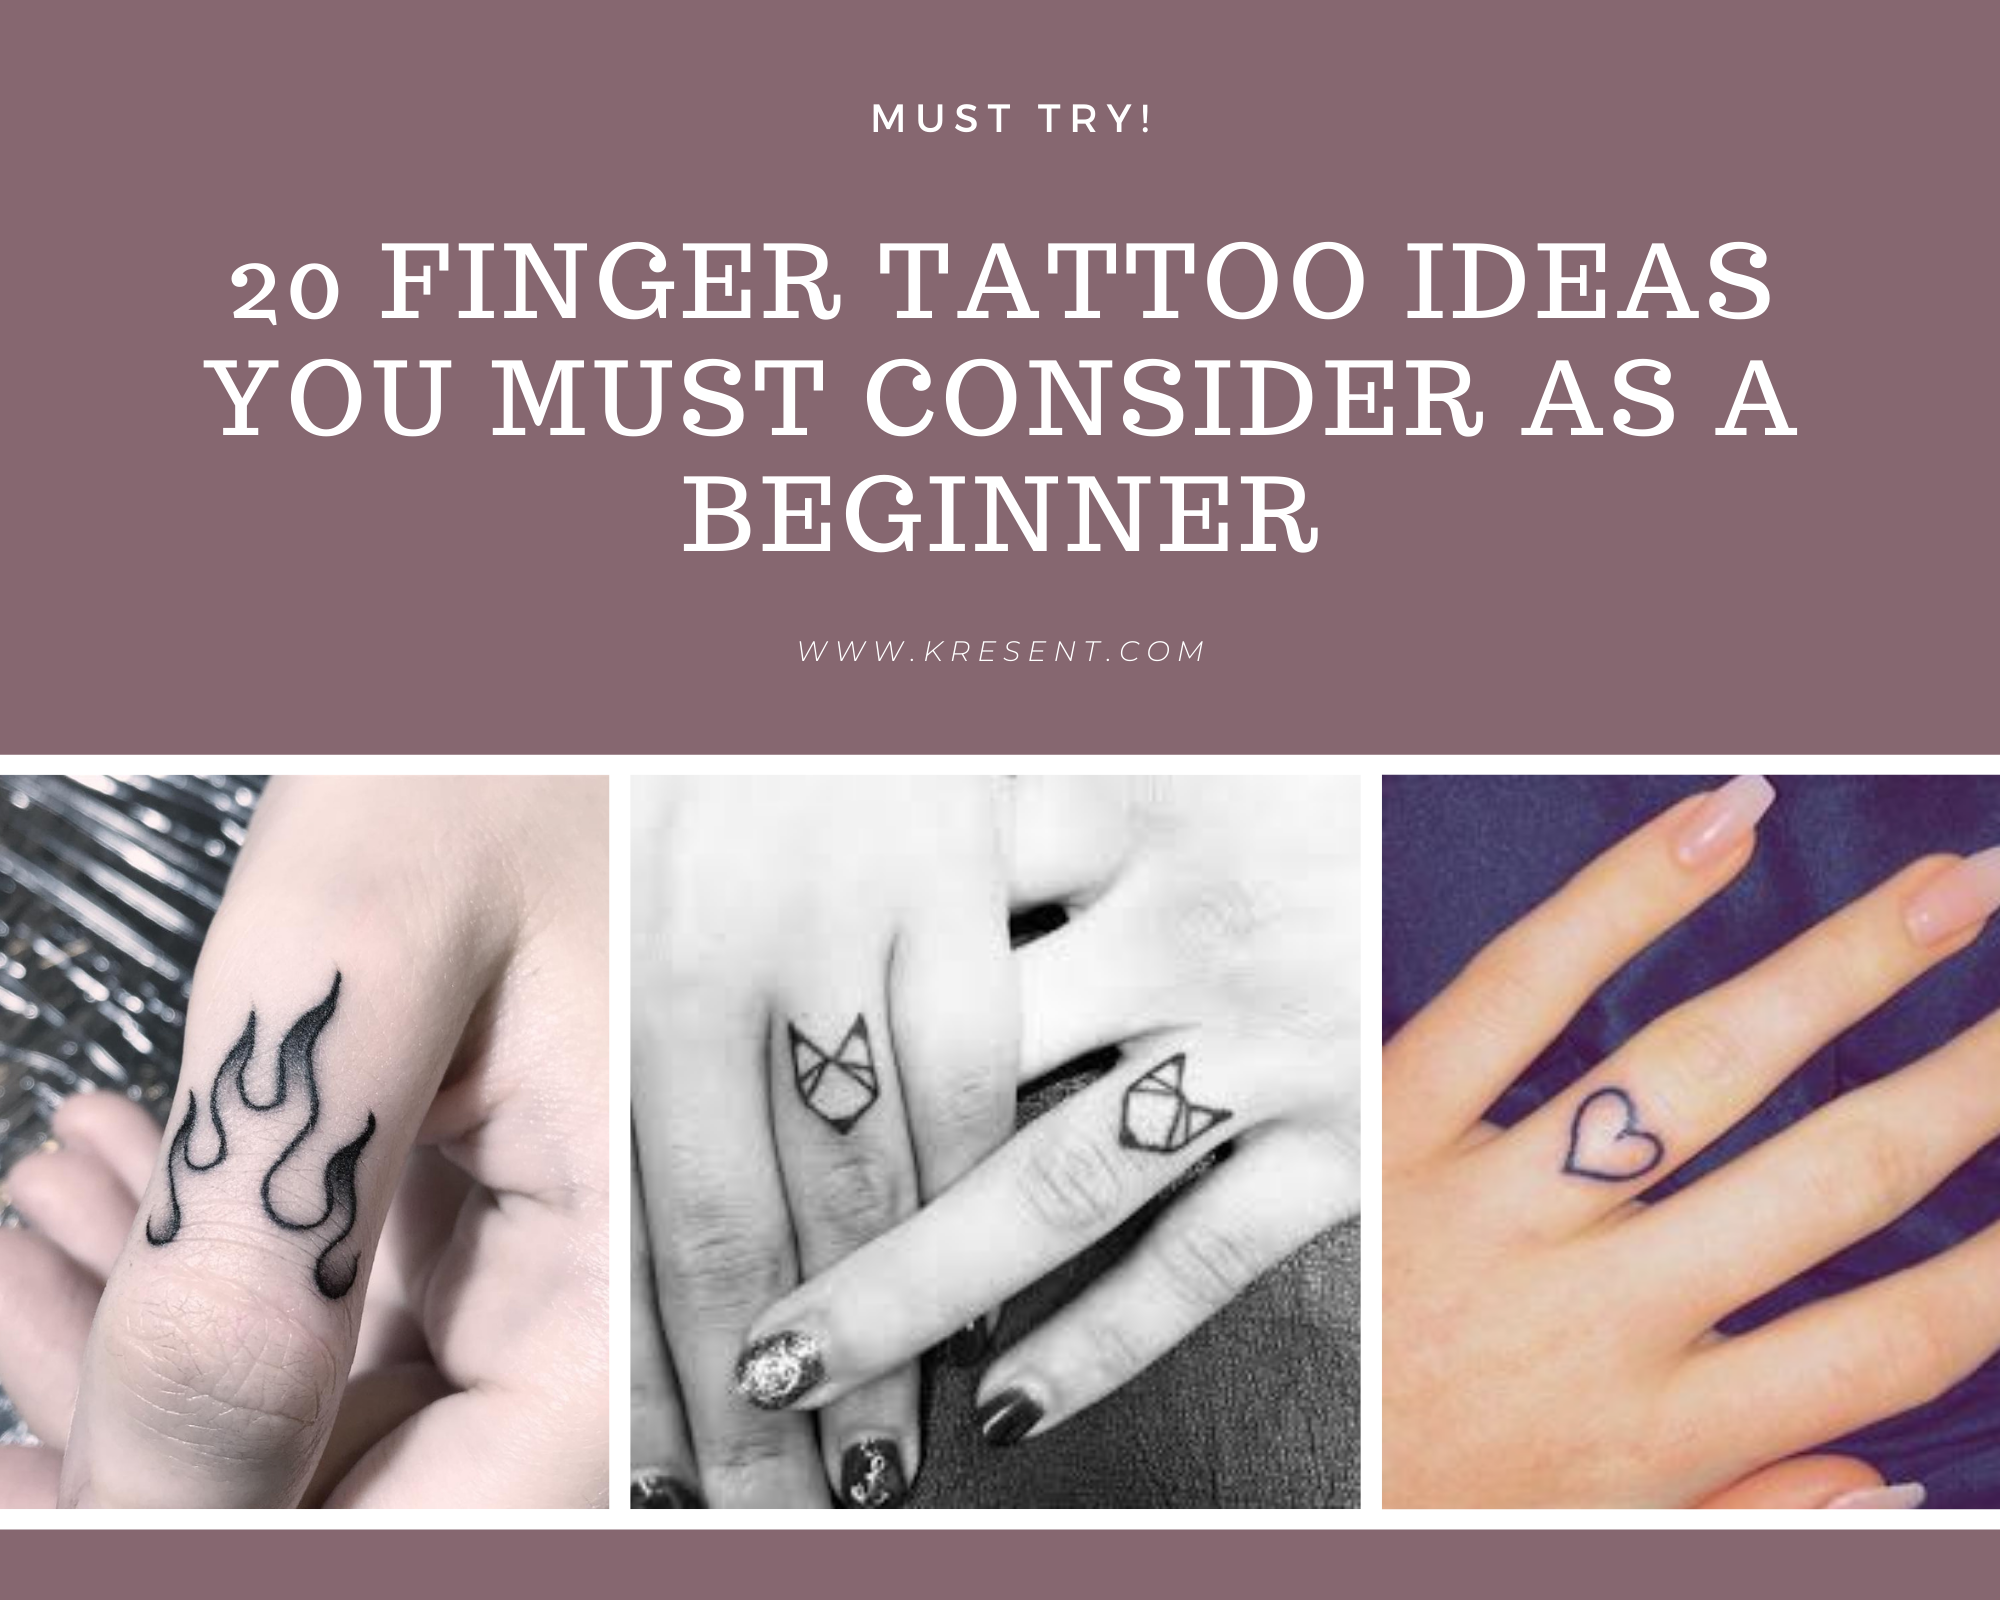 Finger Tattoos - Finger Tattoo Ideas In Minimalist Finger Tattoo & More ...